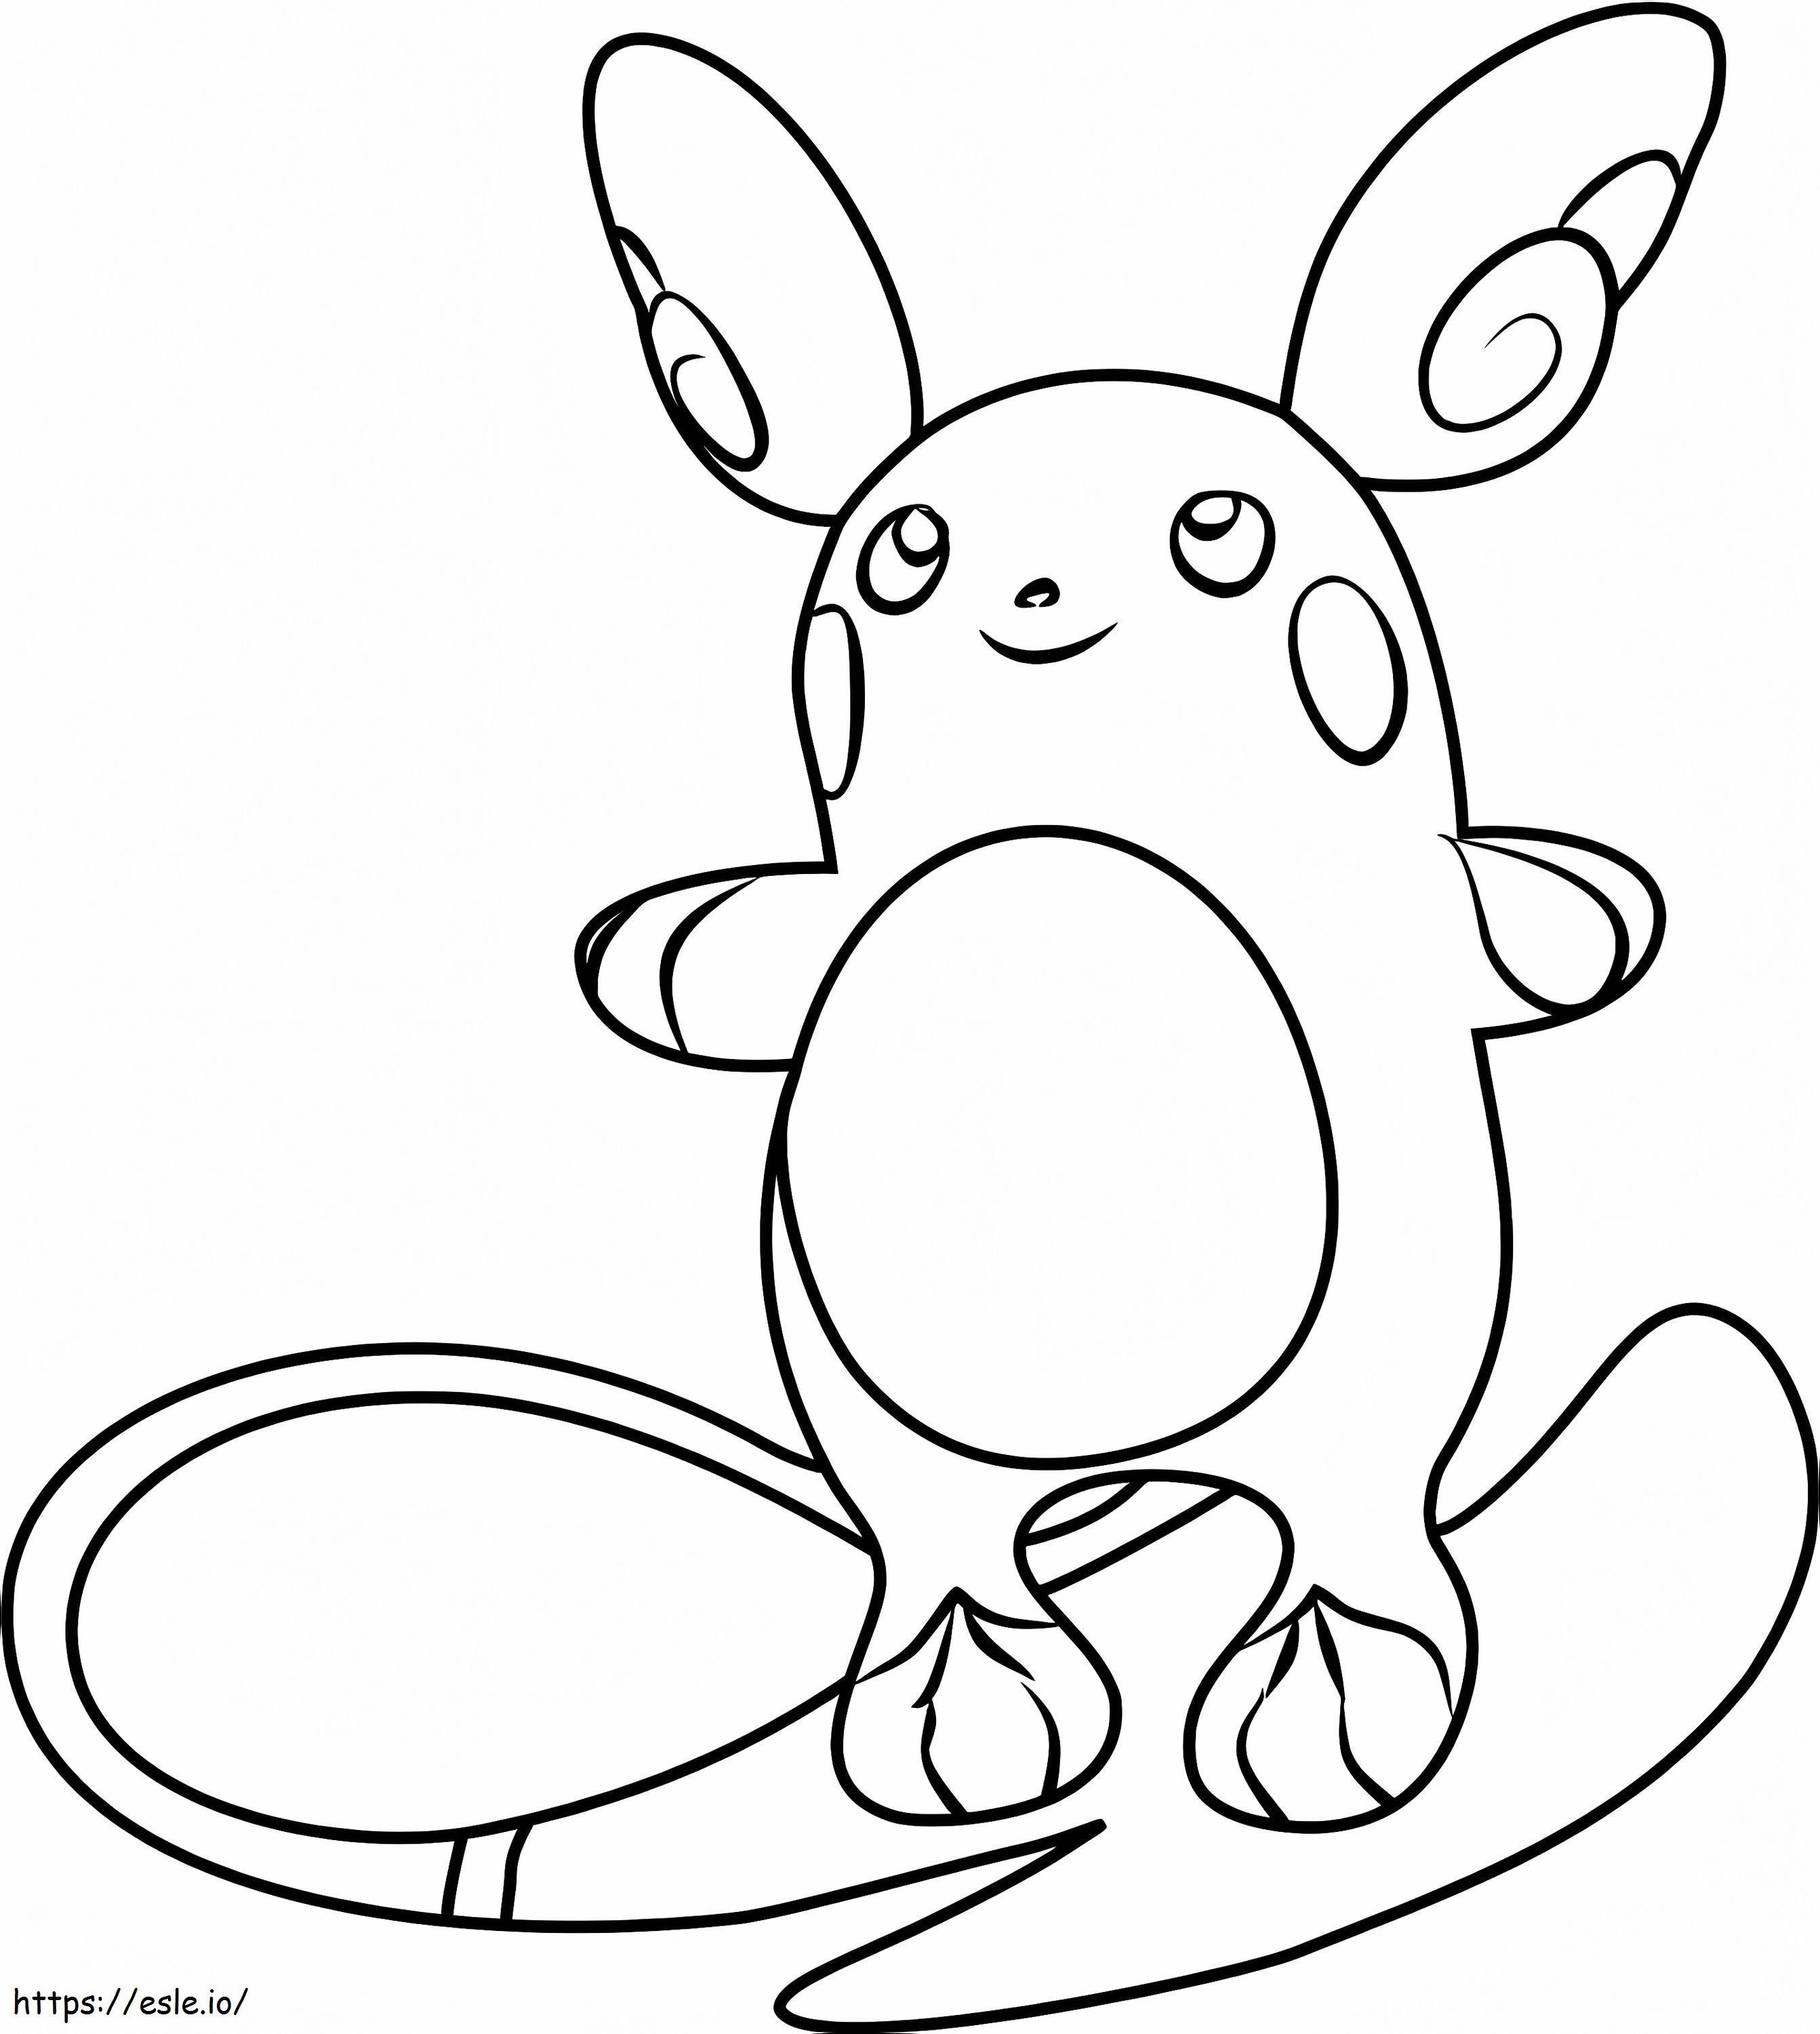 Coloriage Pokémon Raichu d'Alola à imprimer dessin